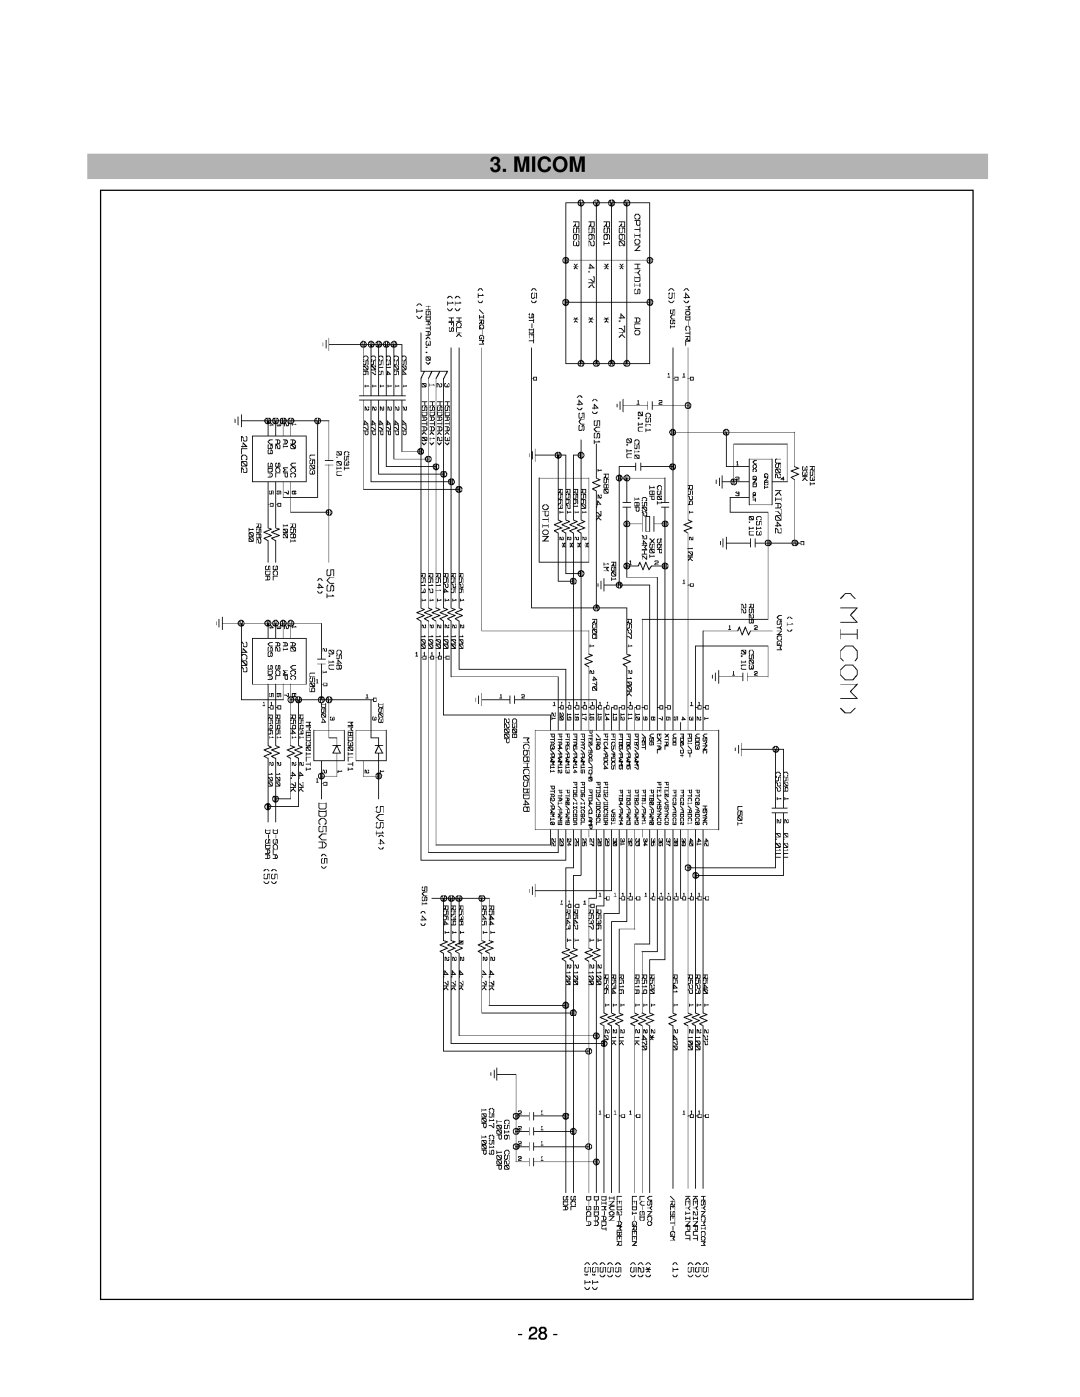 LG Electronics LCD 782LS service manual Micom 